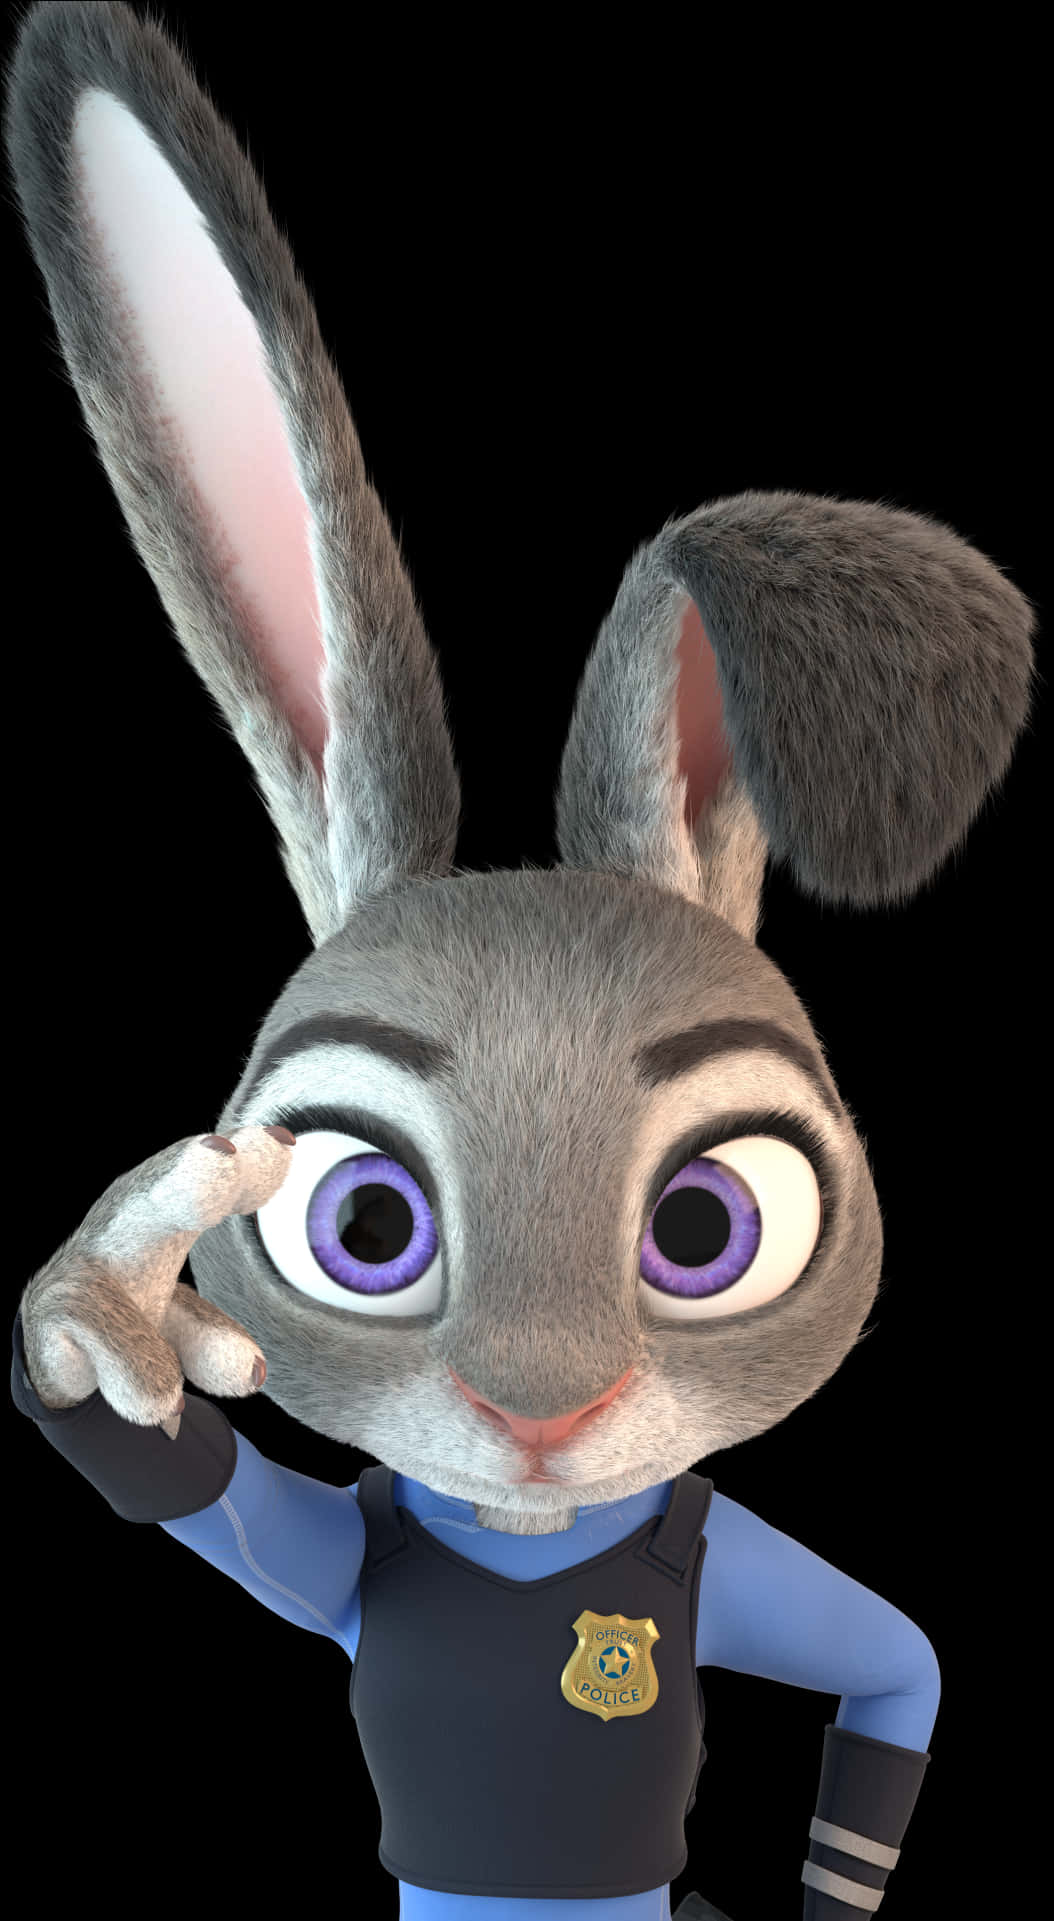 A Cartoon Rabbit With A Finger On The Eye